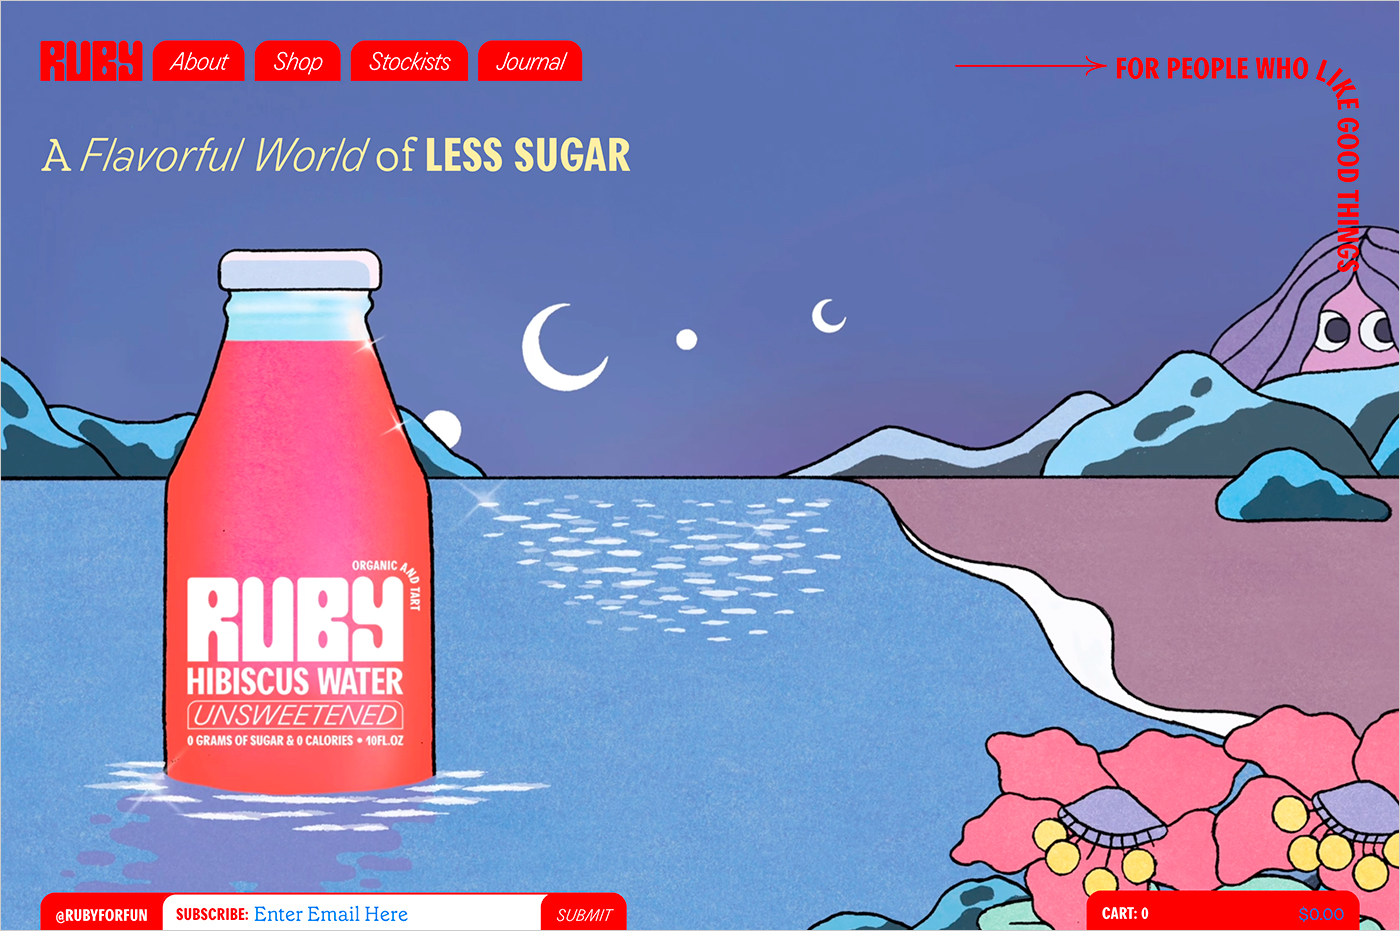 Ruby Hibiscus Waterウェブサイトの画面キャプチャ画像